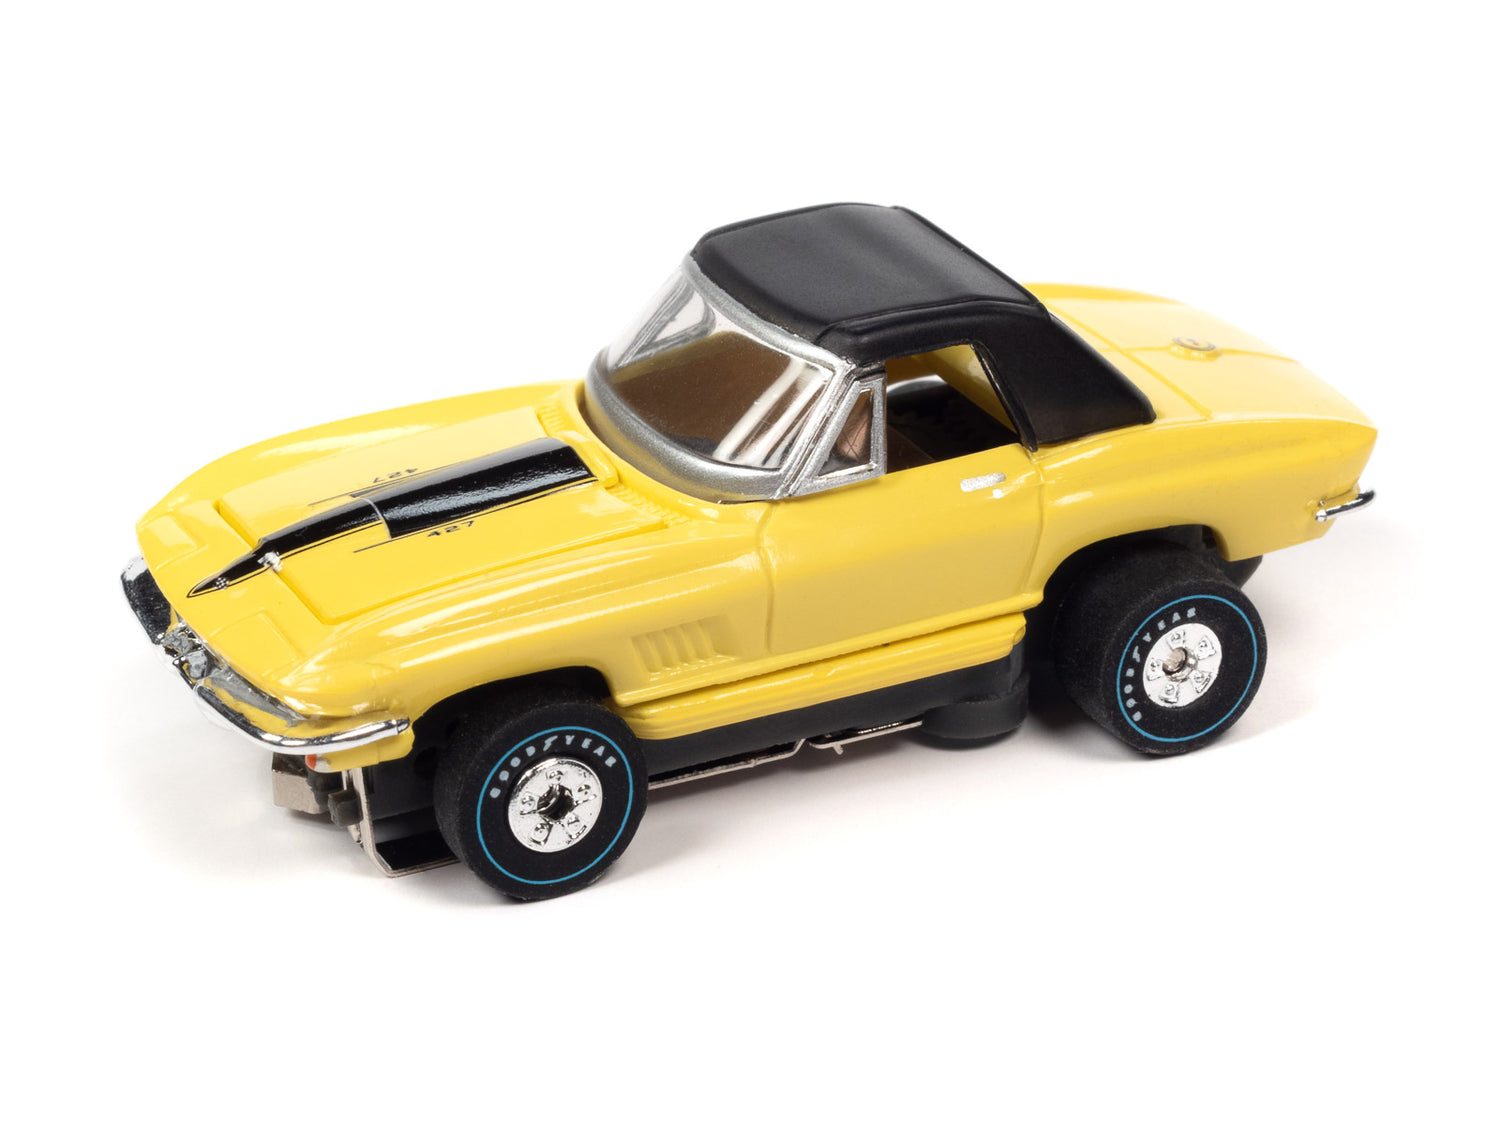 Auto World Thunderjet OK Used Cars 1967 Chevrolet Corvette (Yellow) HO Scale Slot Car